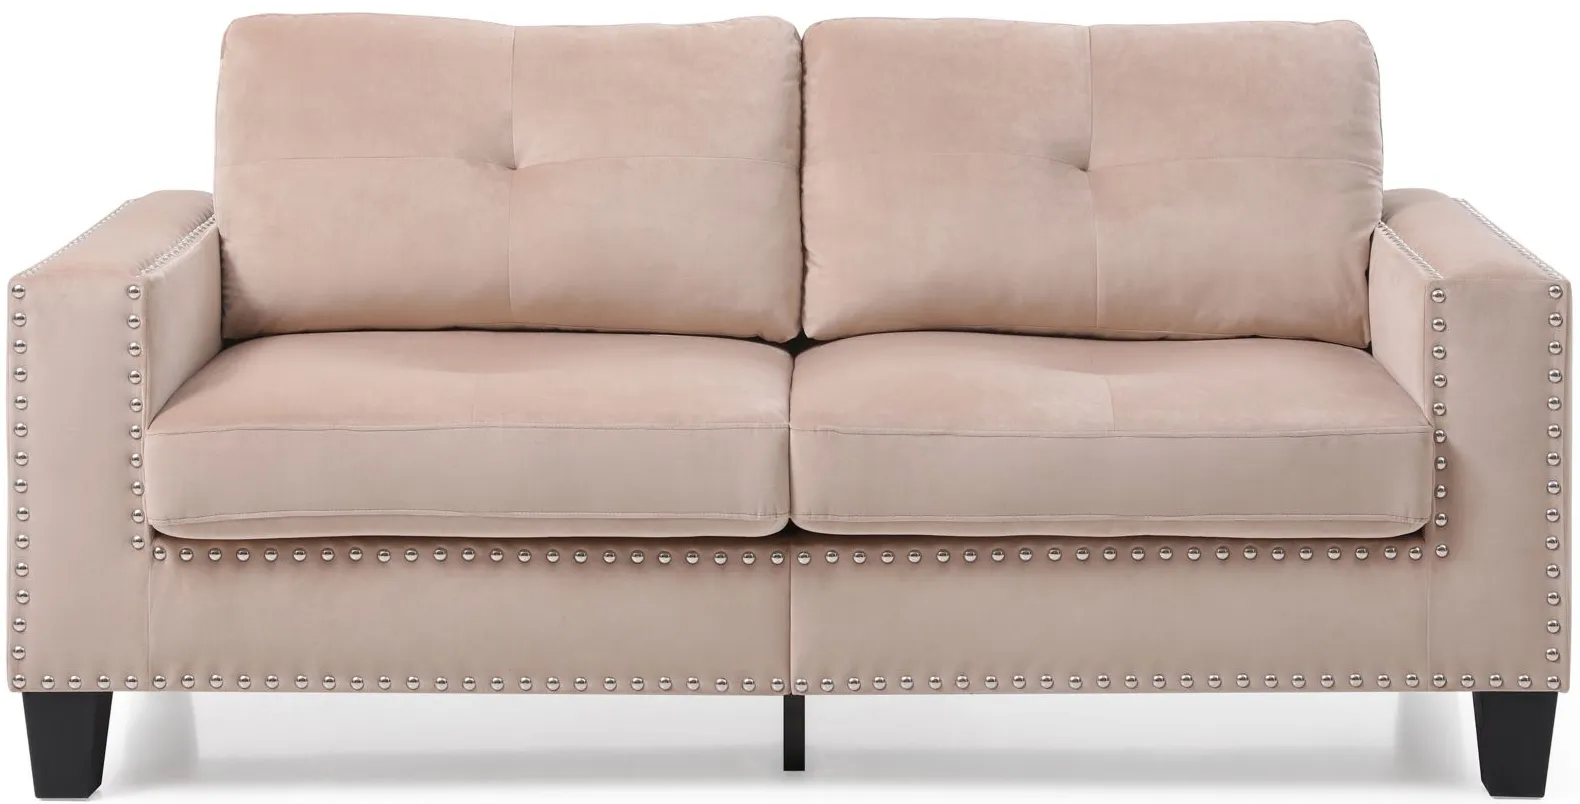 Nailer Sofa in Beige by Glory Furniture